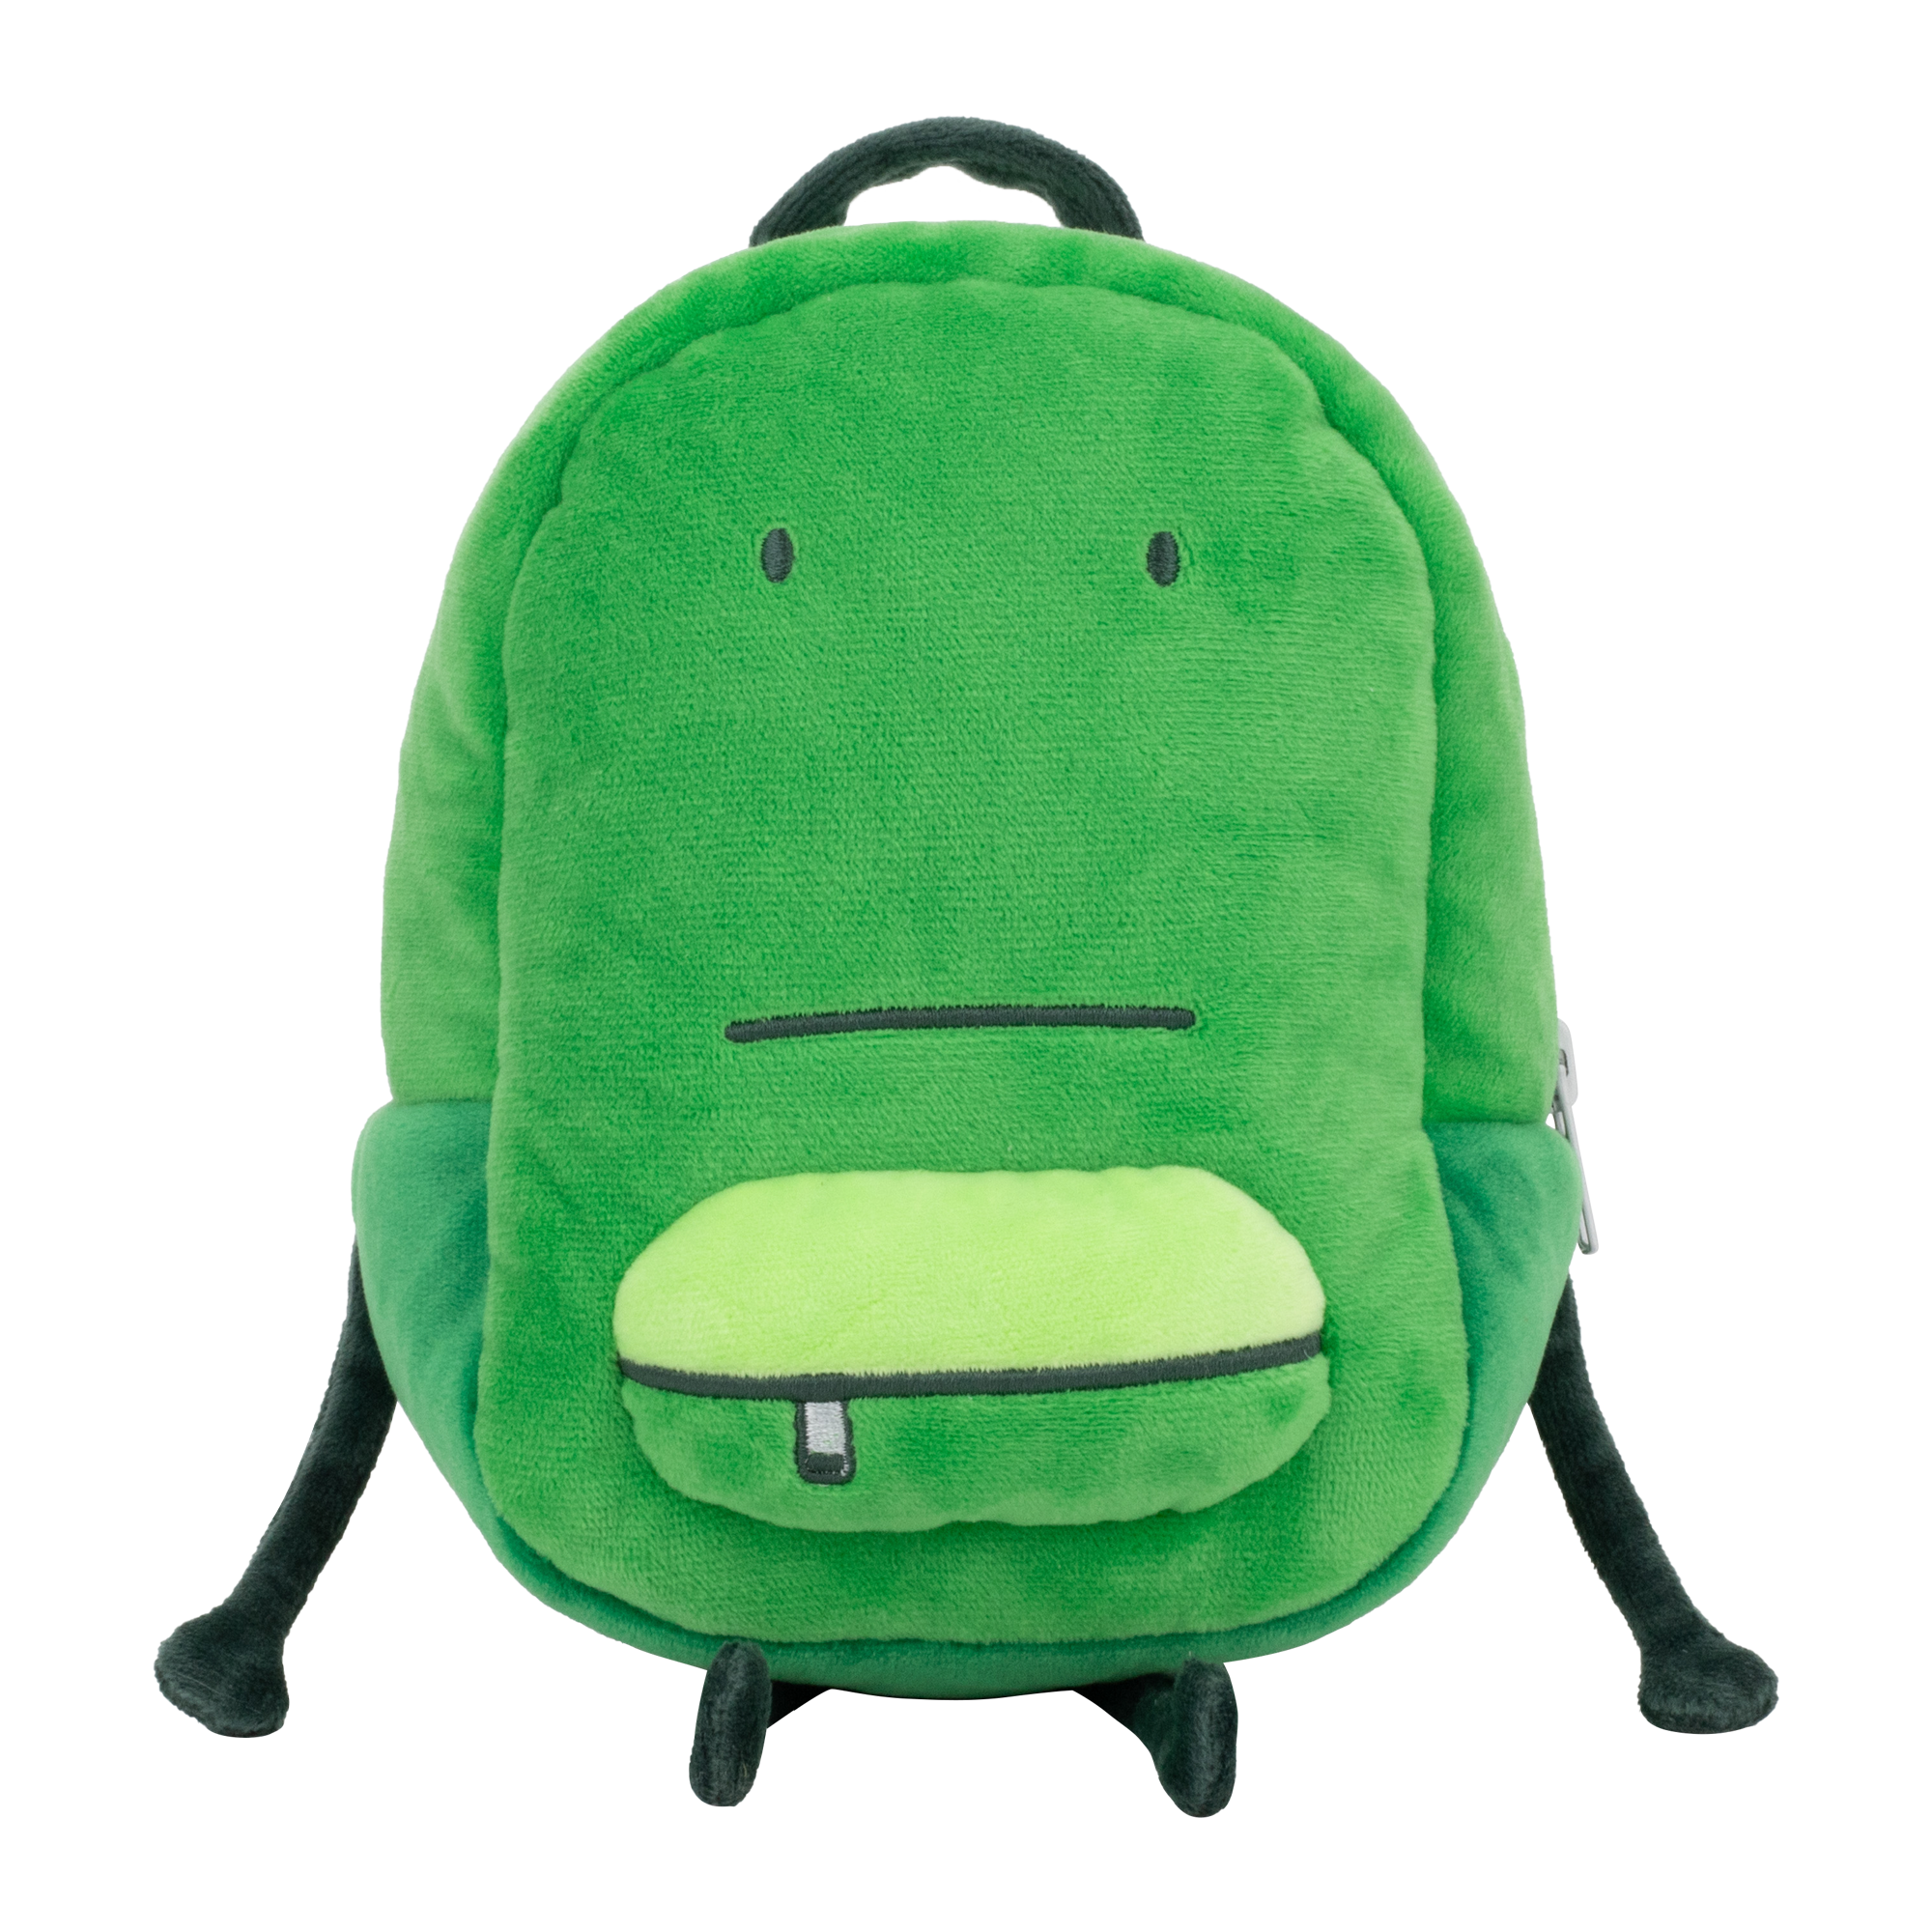 Liam (Backpack) Plush